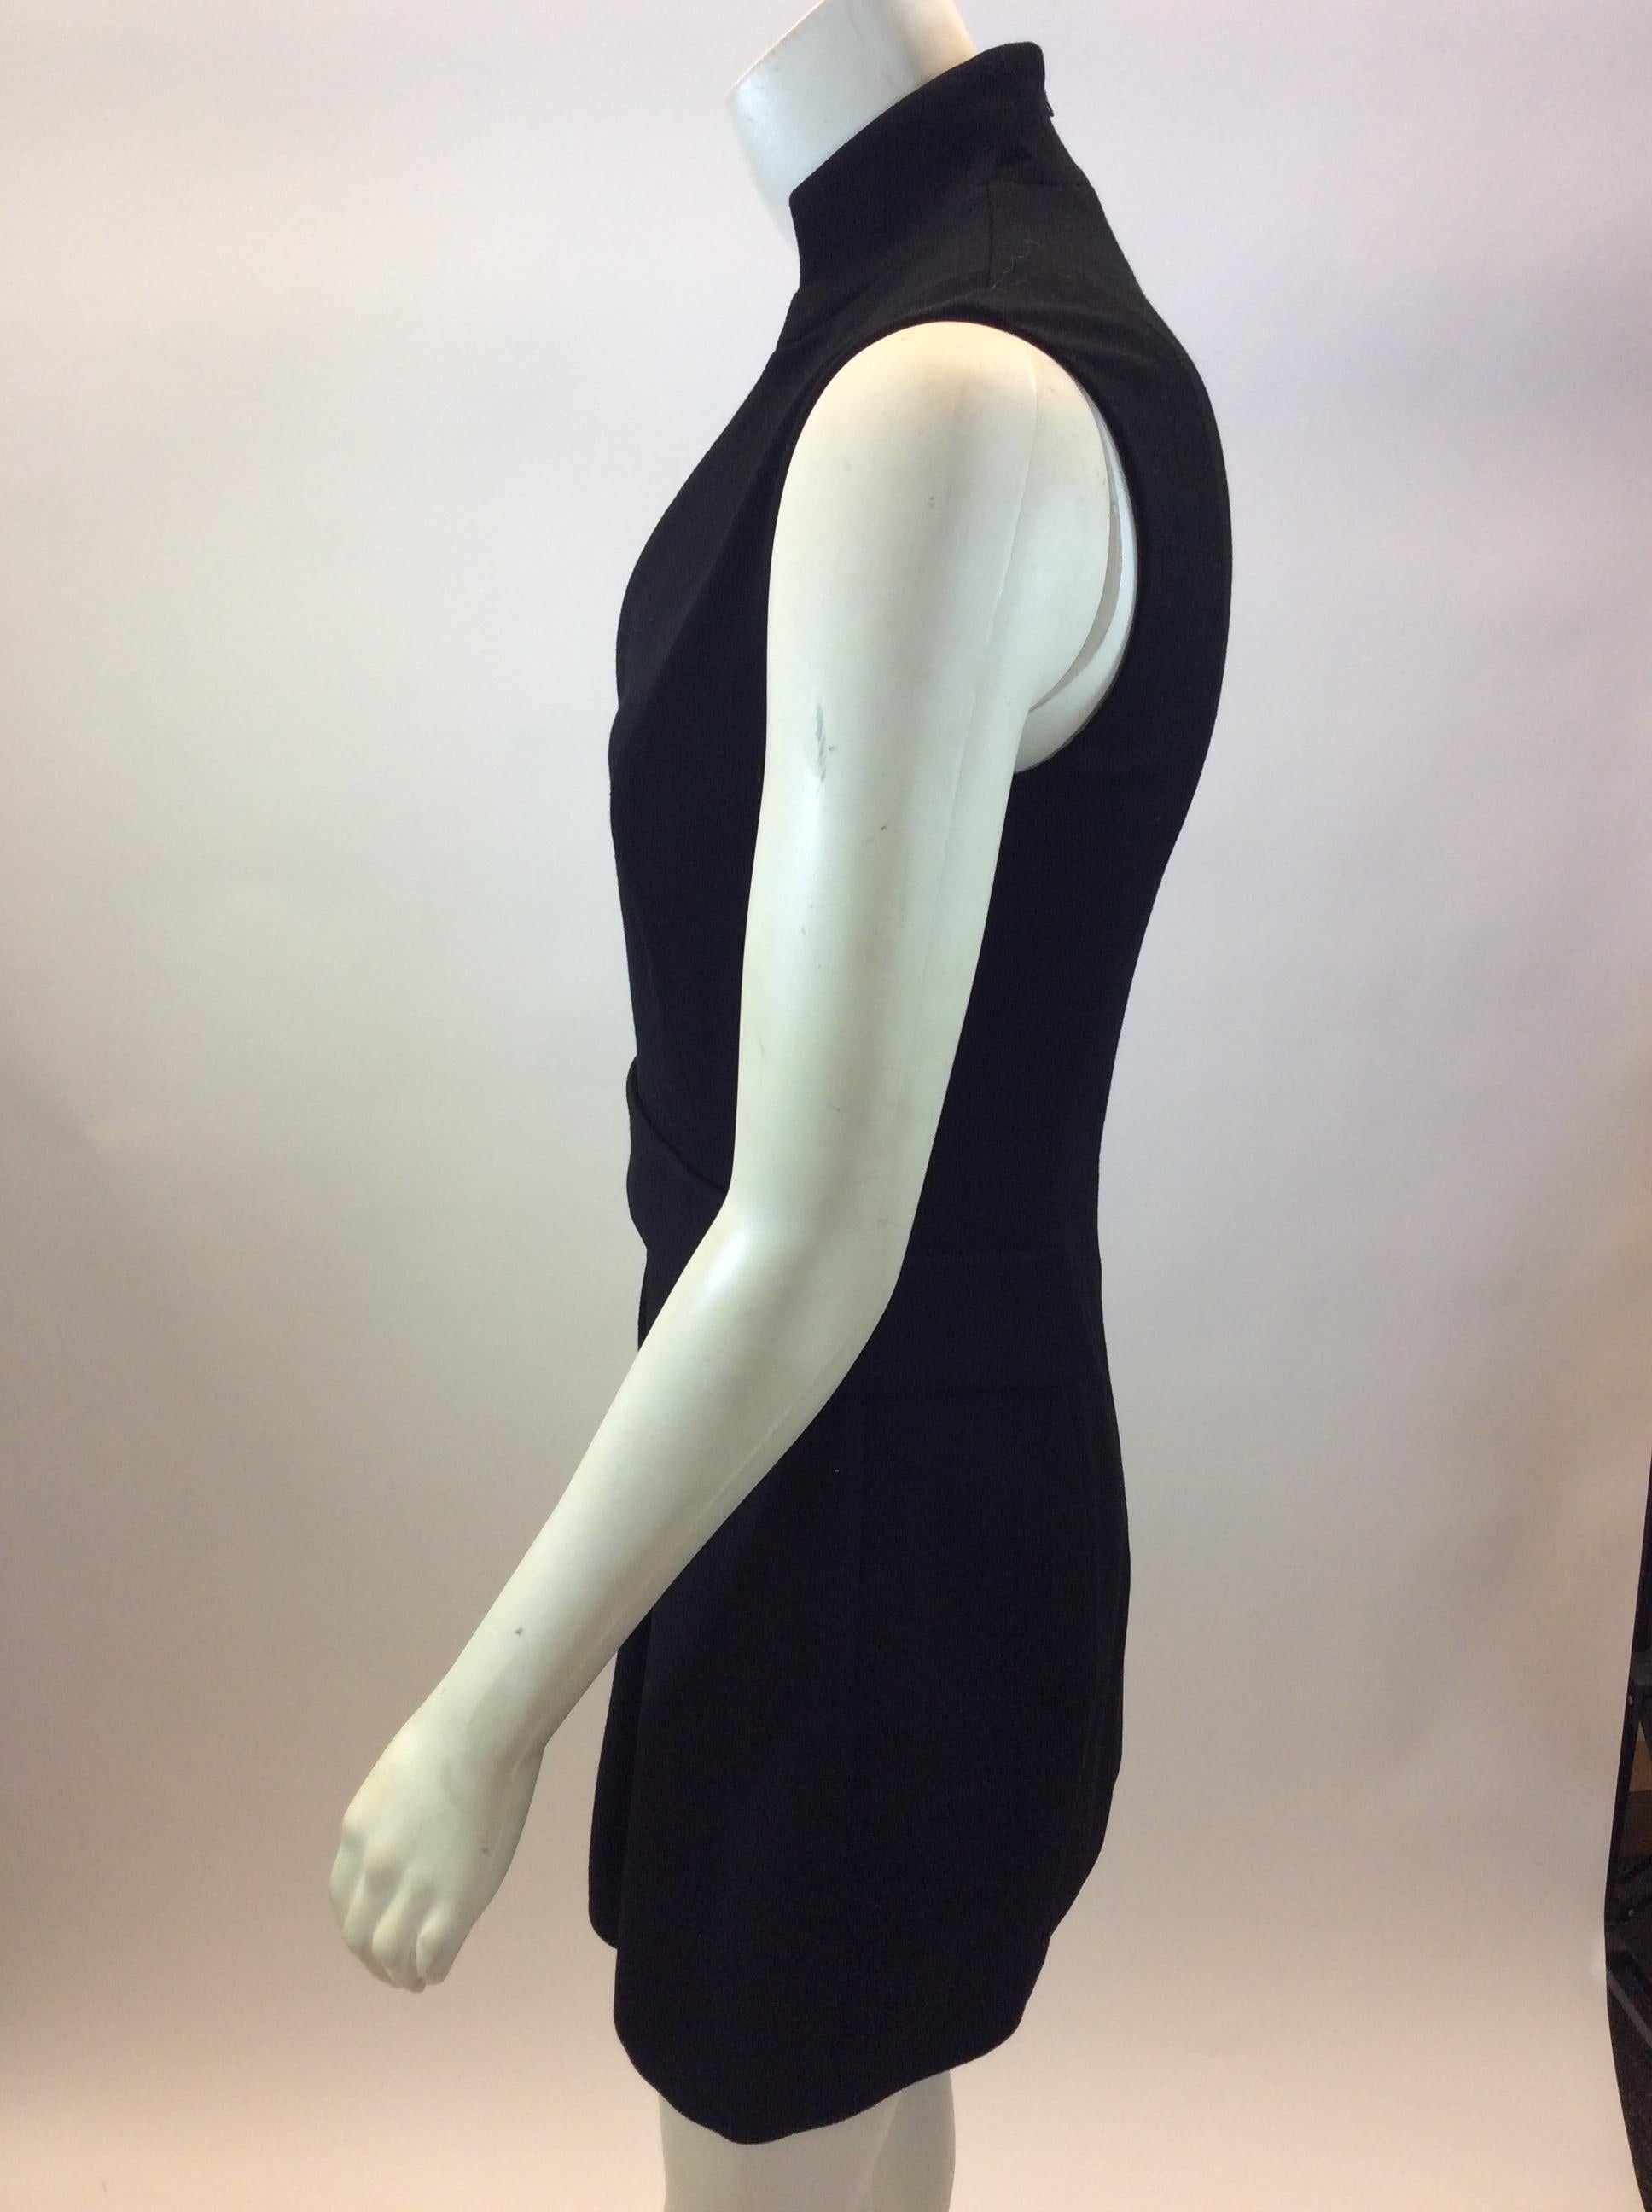 Akris Black Dress
$199
Made in Switzerland
69% viscose, 25% nylon, 6% elastane
Size 4
Length 31.5